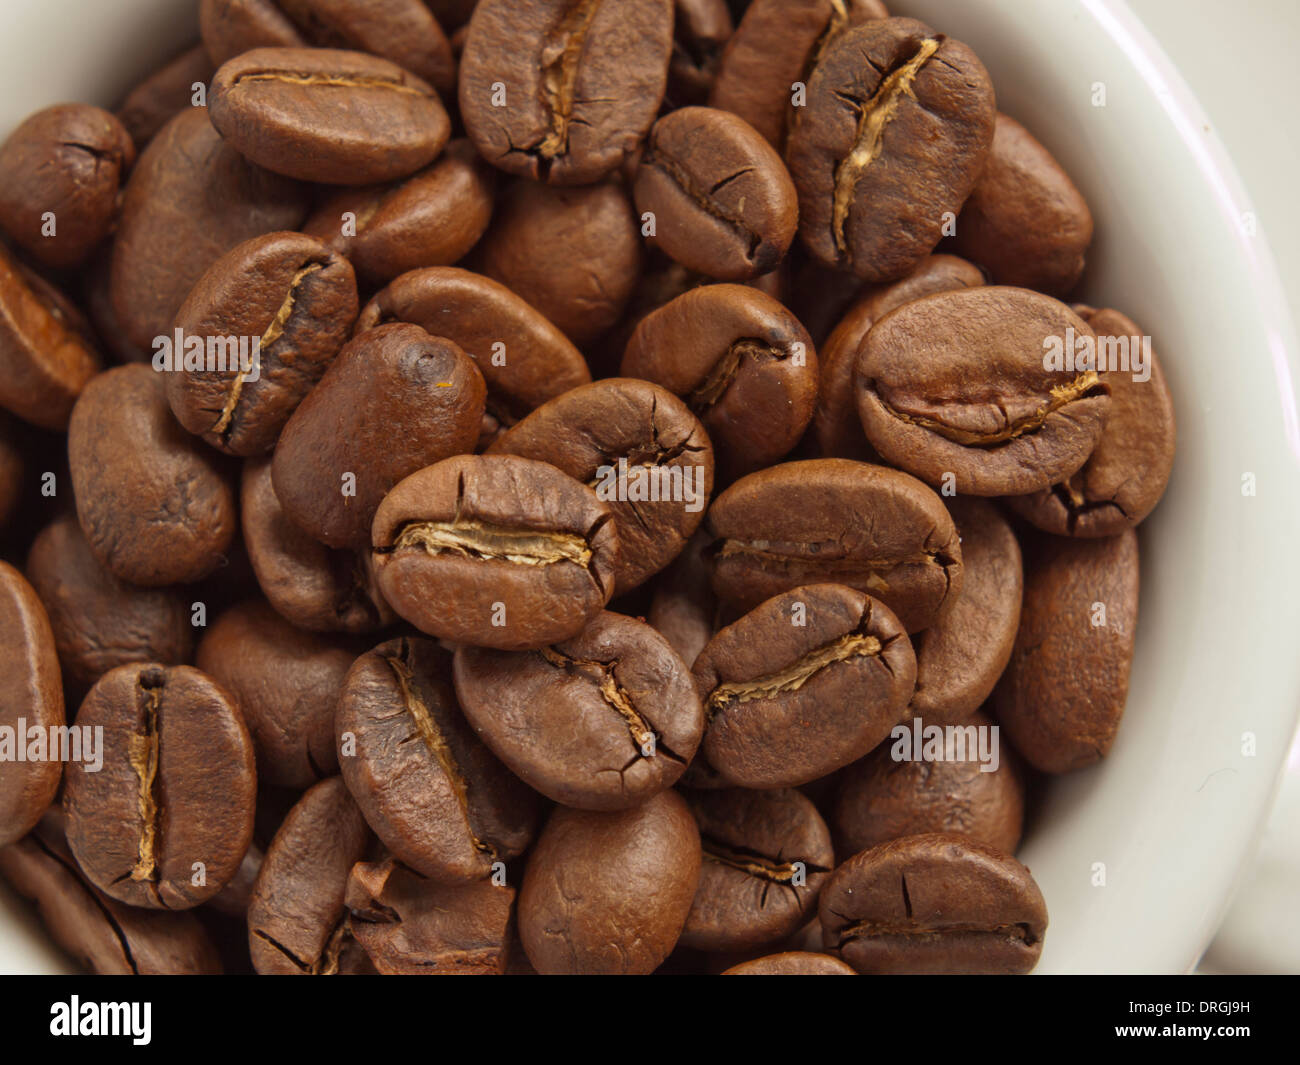 fresh arabica coffee beans in espresso cup / close-up Stock Photo